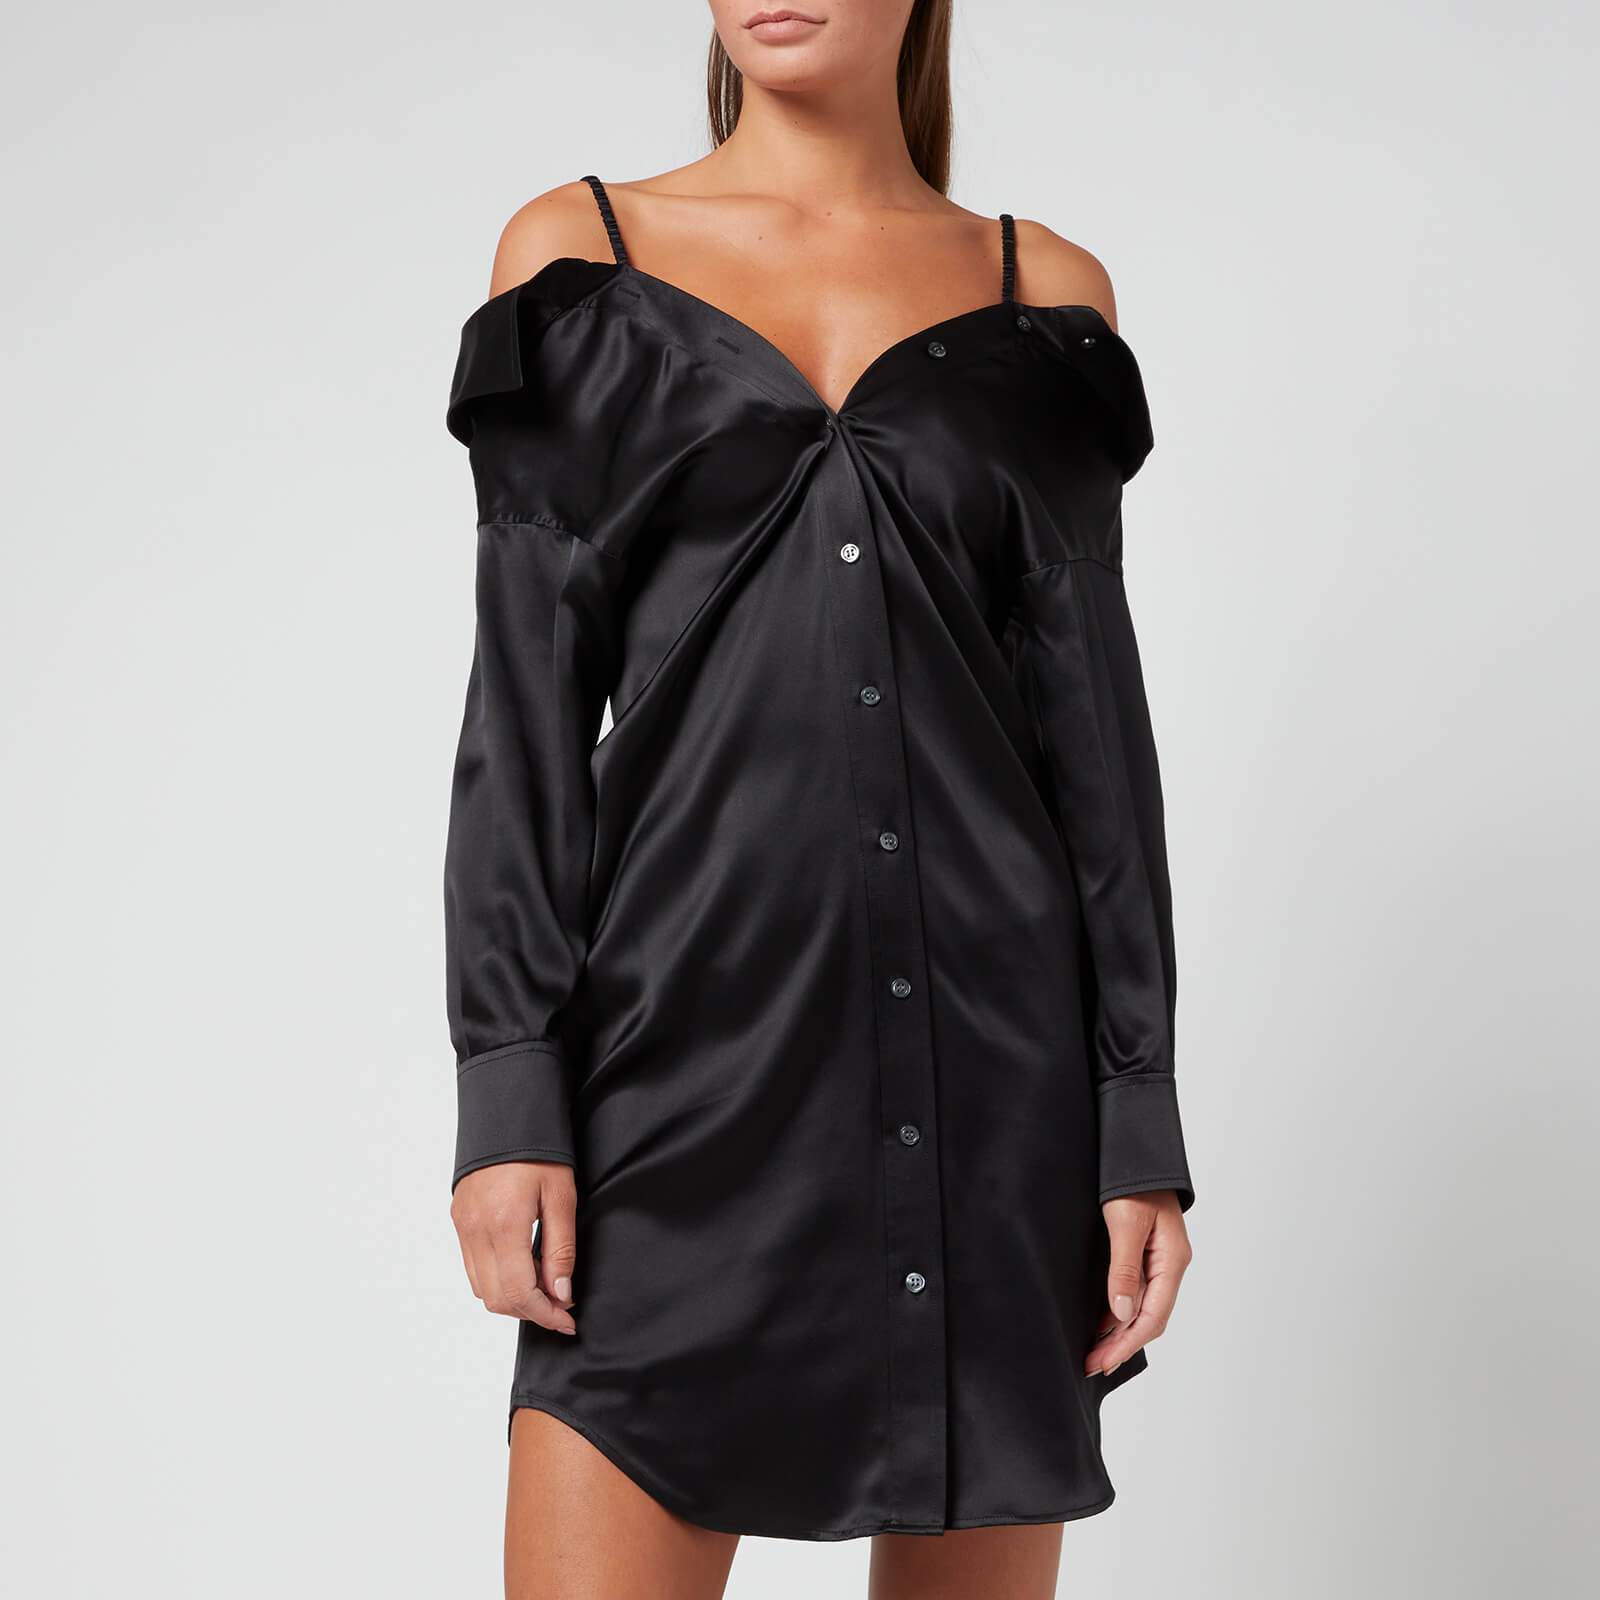 Alexander Wang Women's Off The Shoulder Shirt Dress With Scrunchie Strap - Black - US 12/UK 8